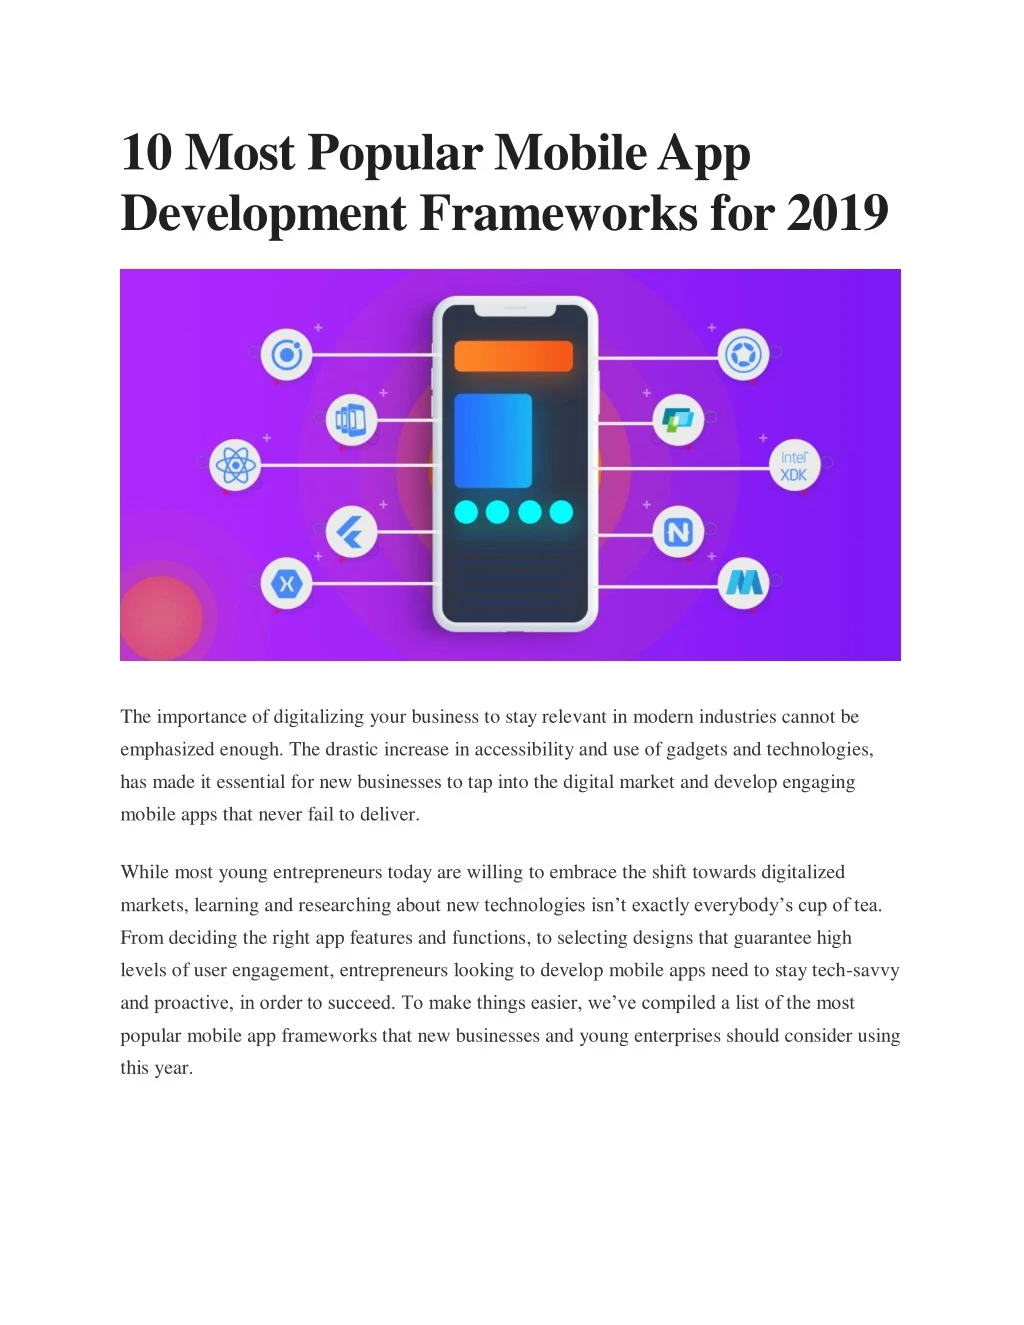 10 most popular mobile app development frameworks